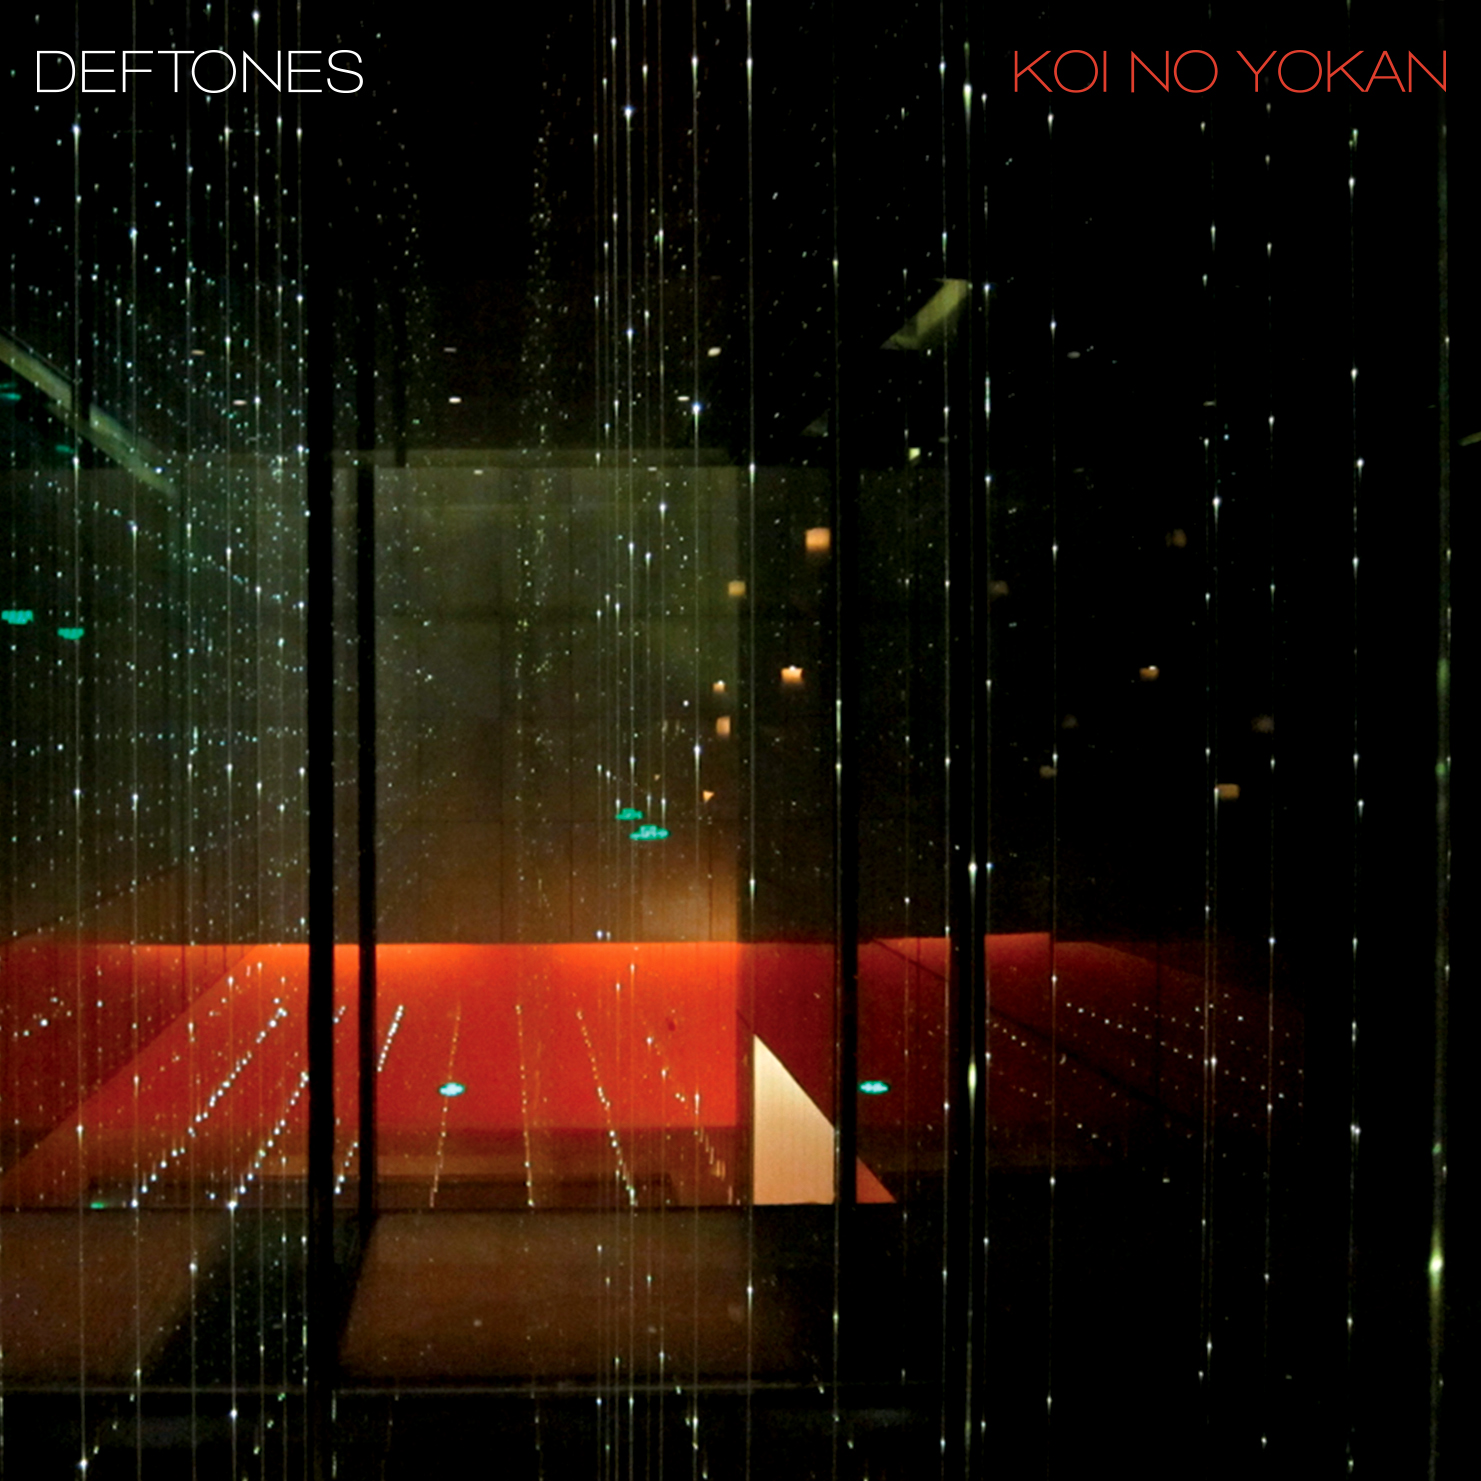 Deftones - Collectie (1993 - 2020)